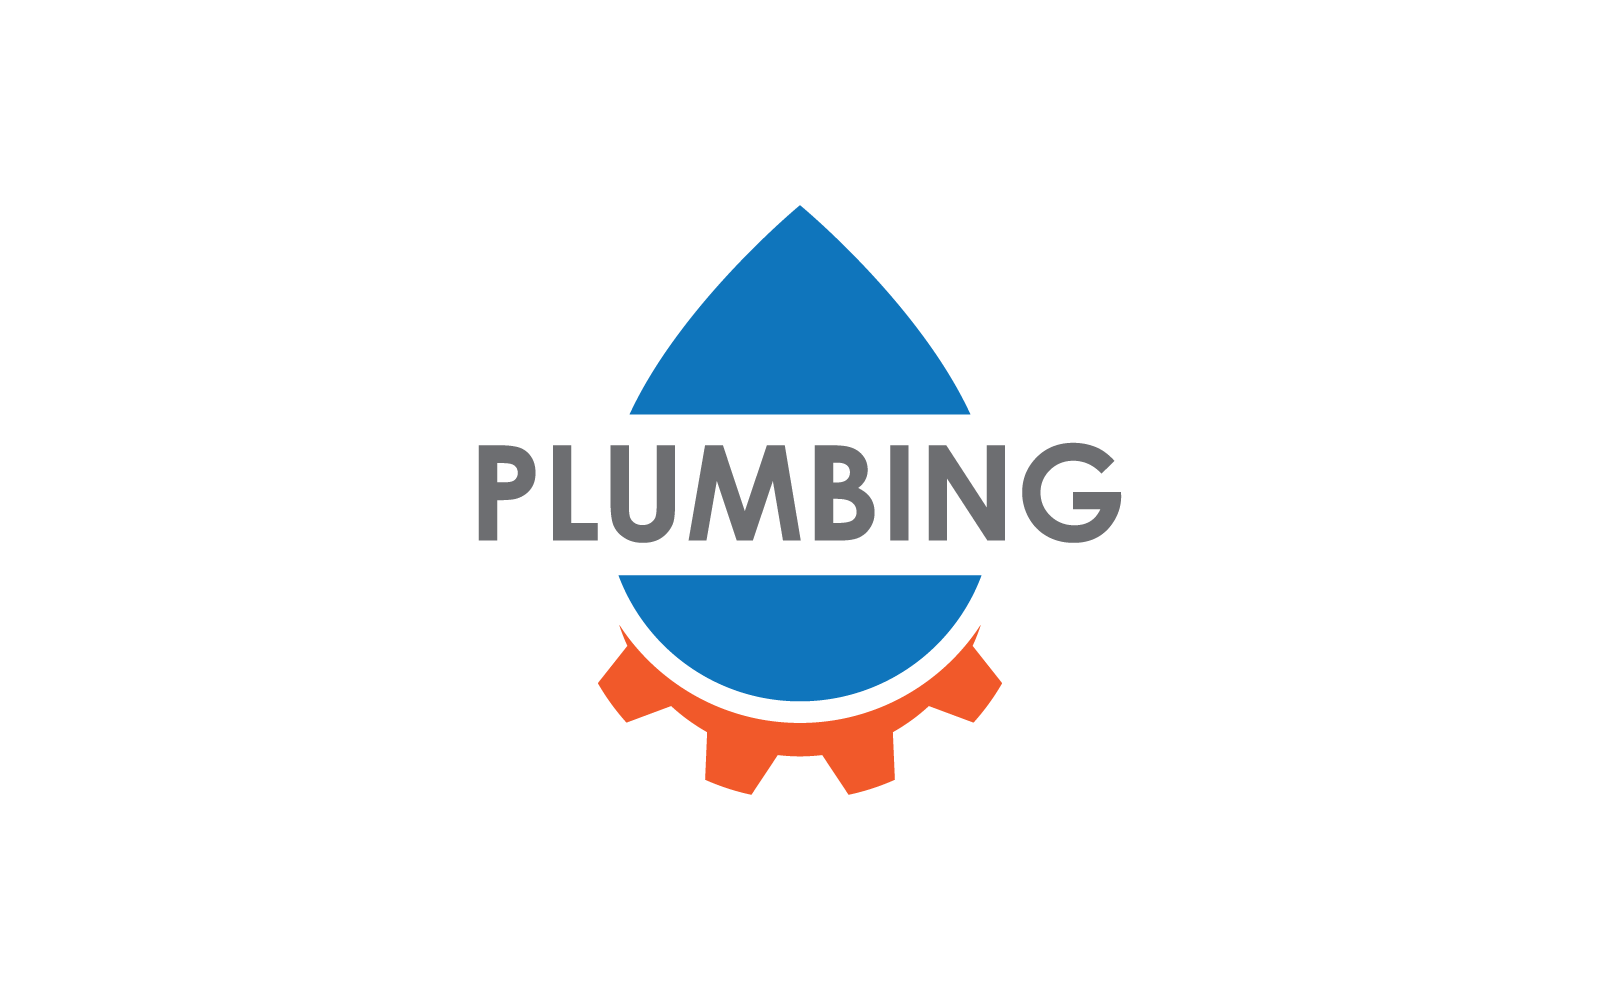 Plumbing illustration logo vector design business template